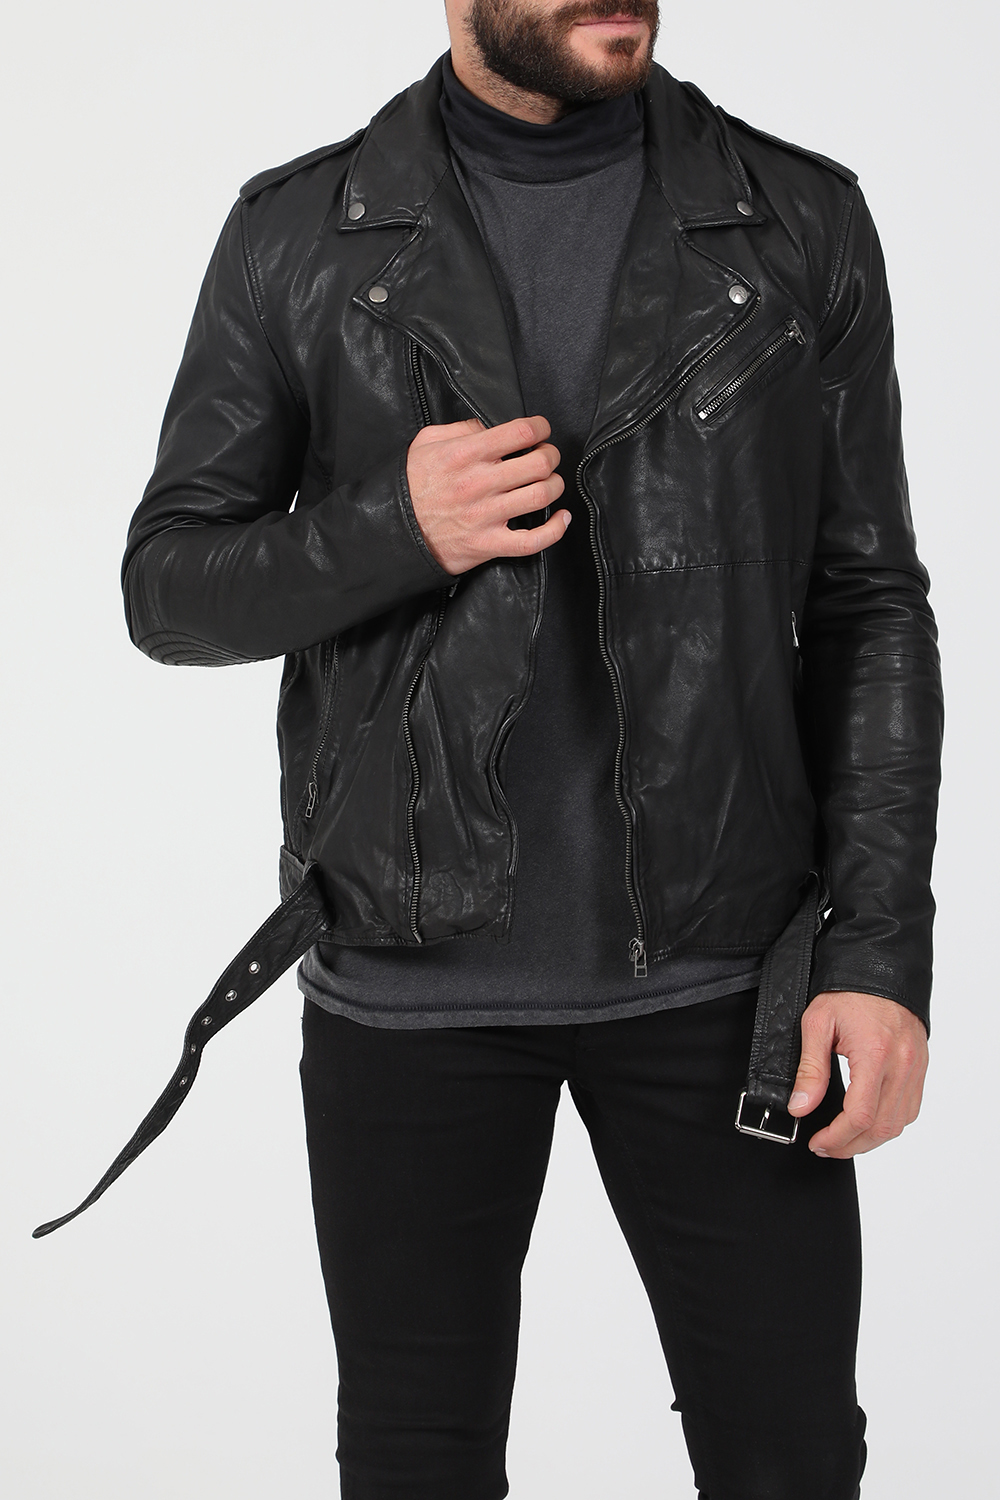 GOOSECRAFT – Ανδρικο δερματινο jacket GOOSECRAFT GC MASON BIKER μαυρο